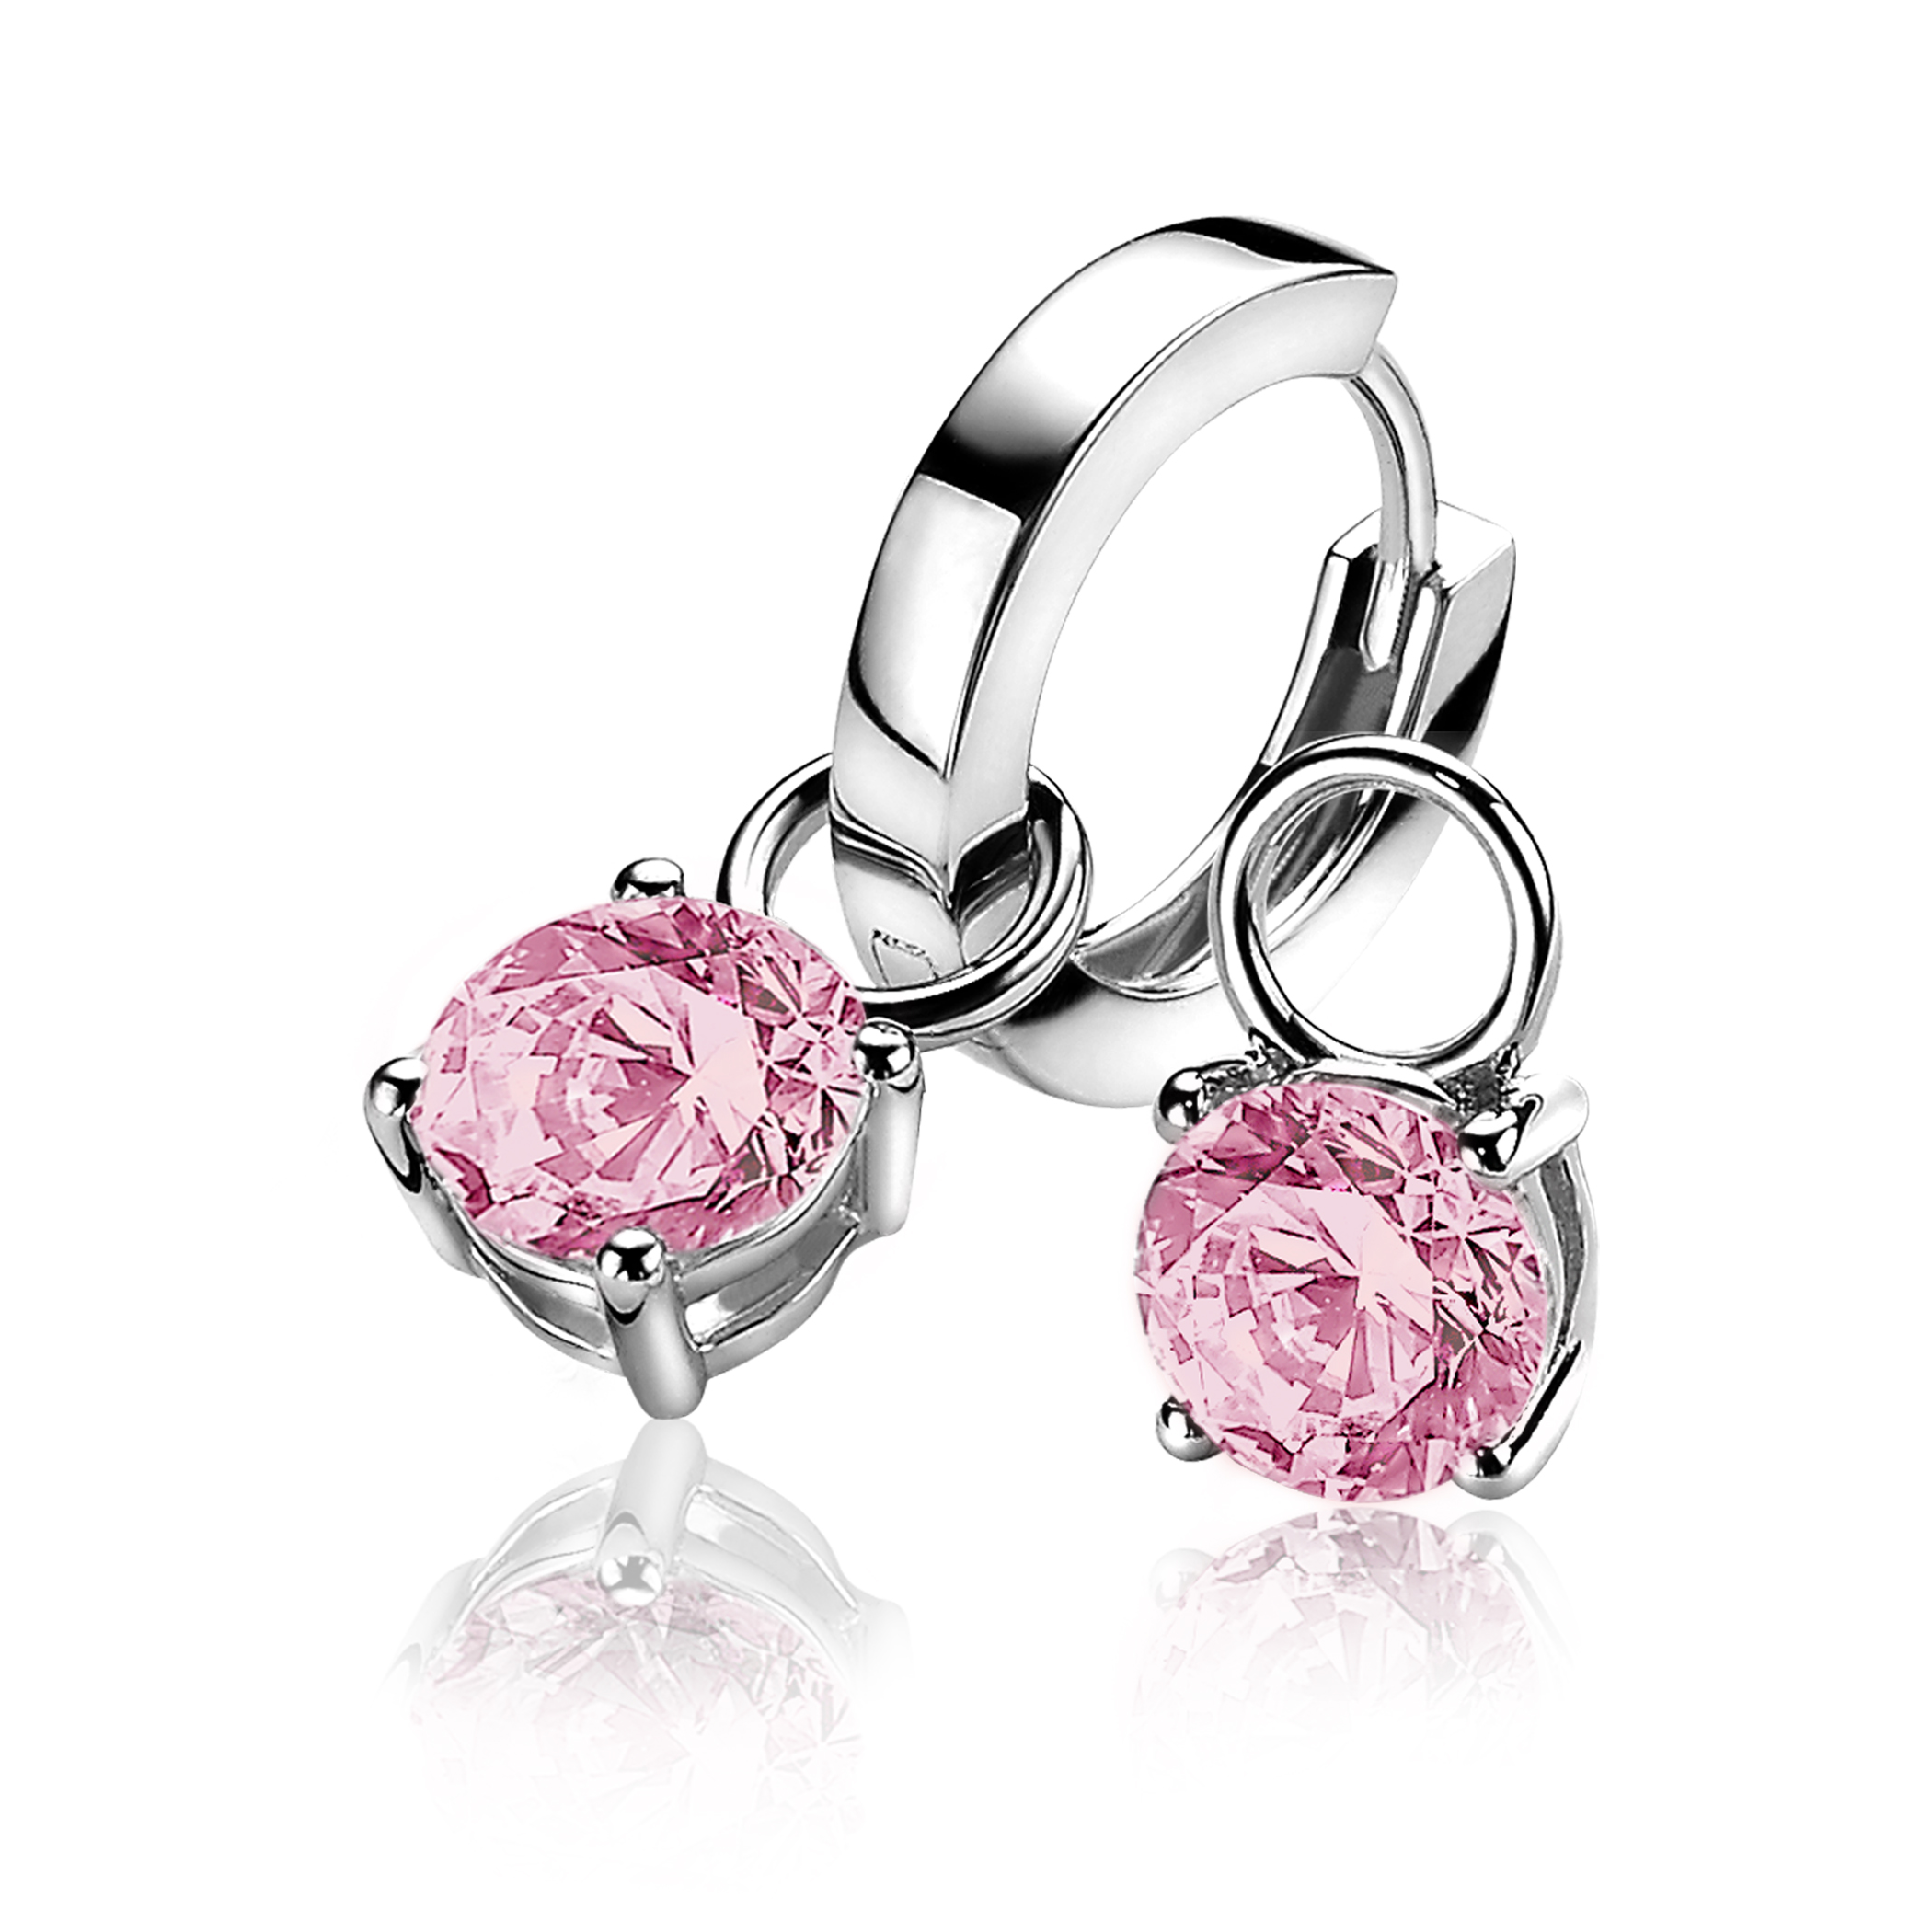 ZINZI Sterling Silver Earrings Pendants Round Pink ZICH1300R (excl. hoop earrings)